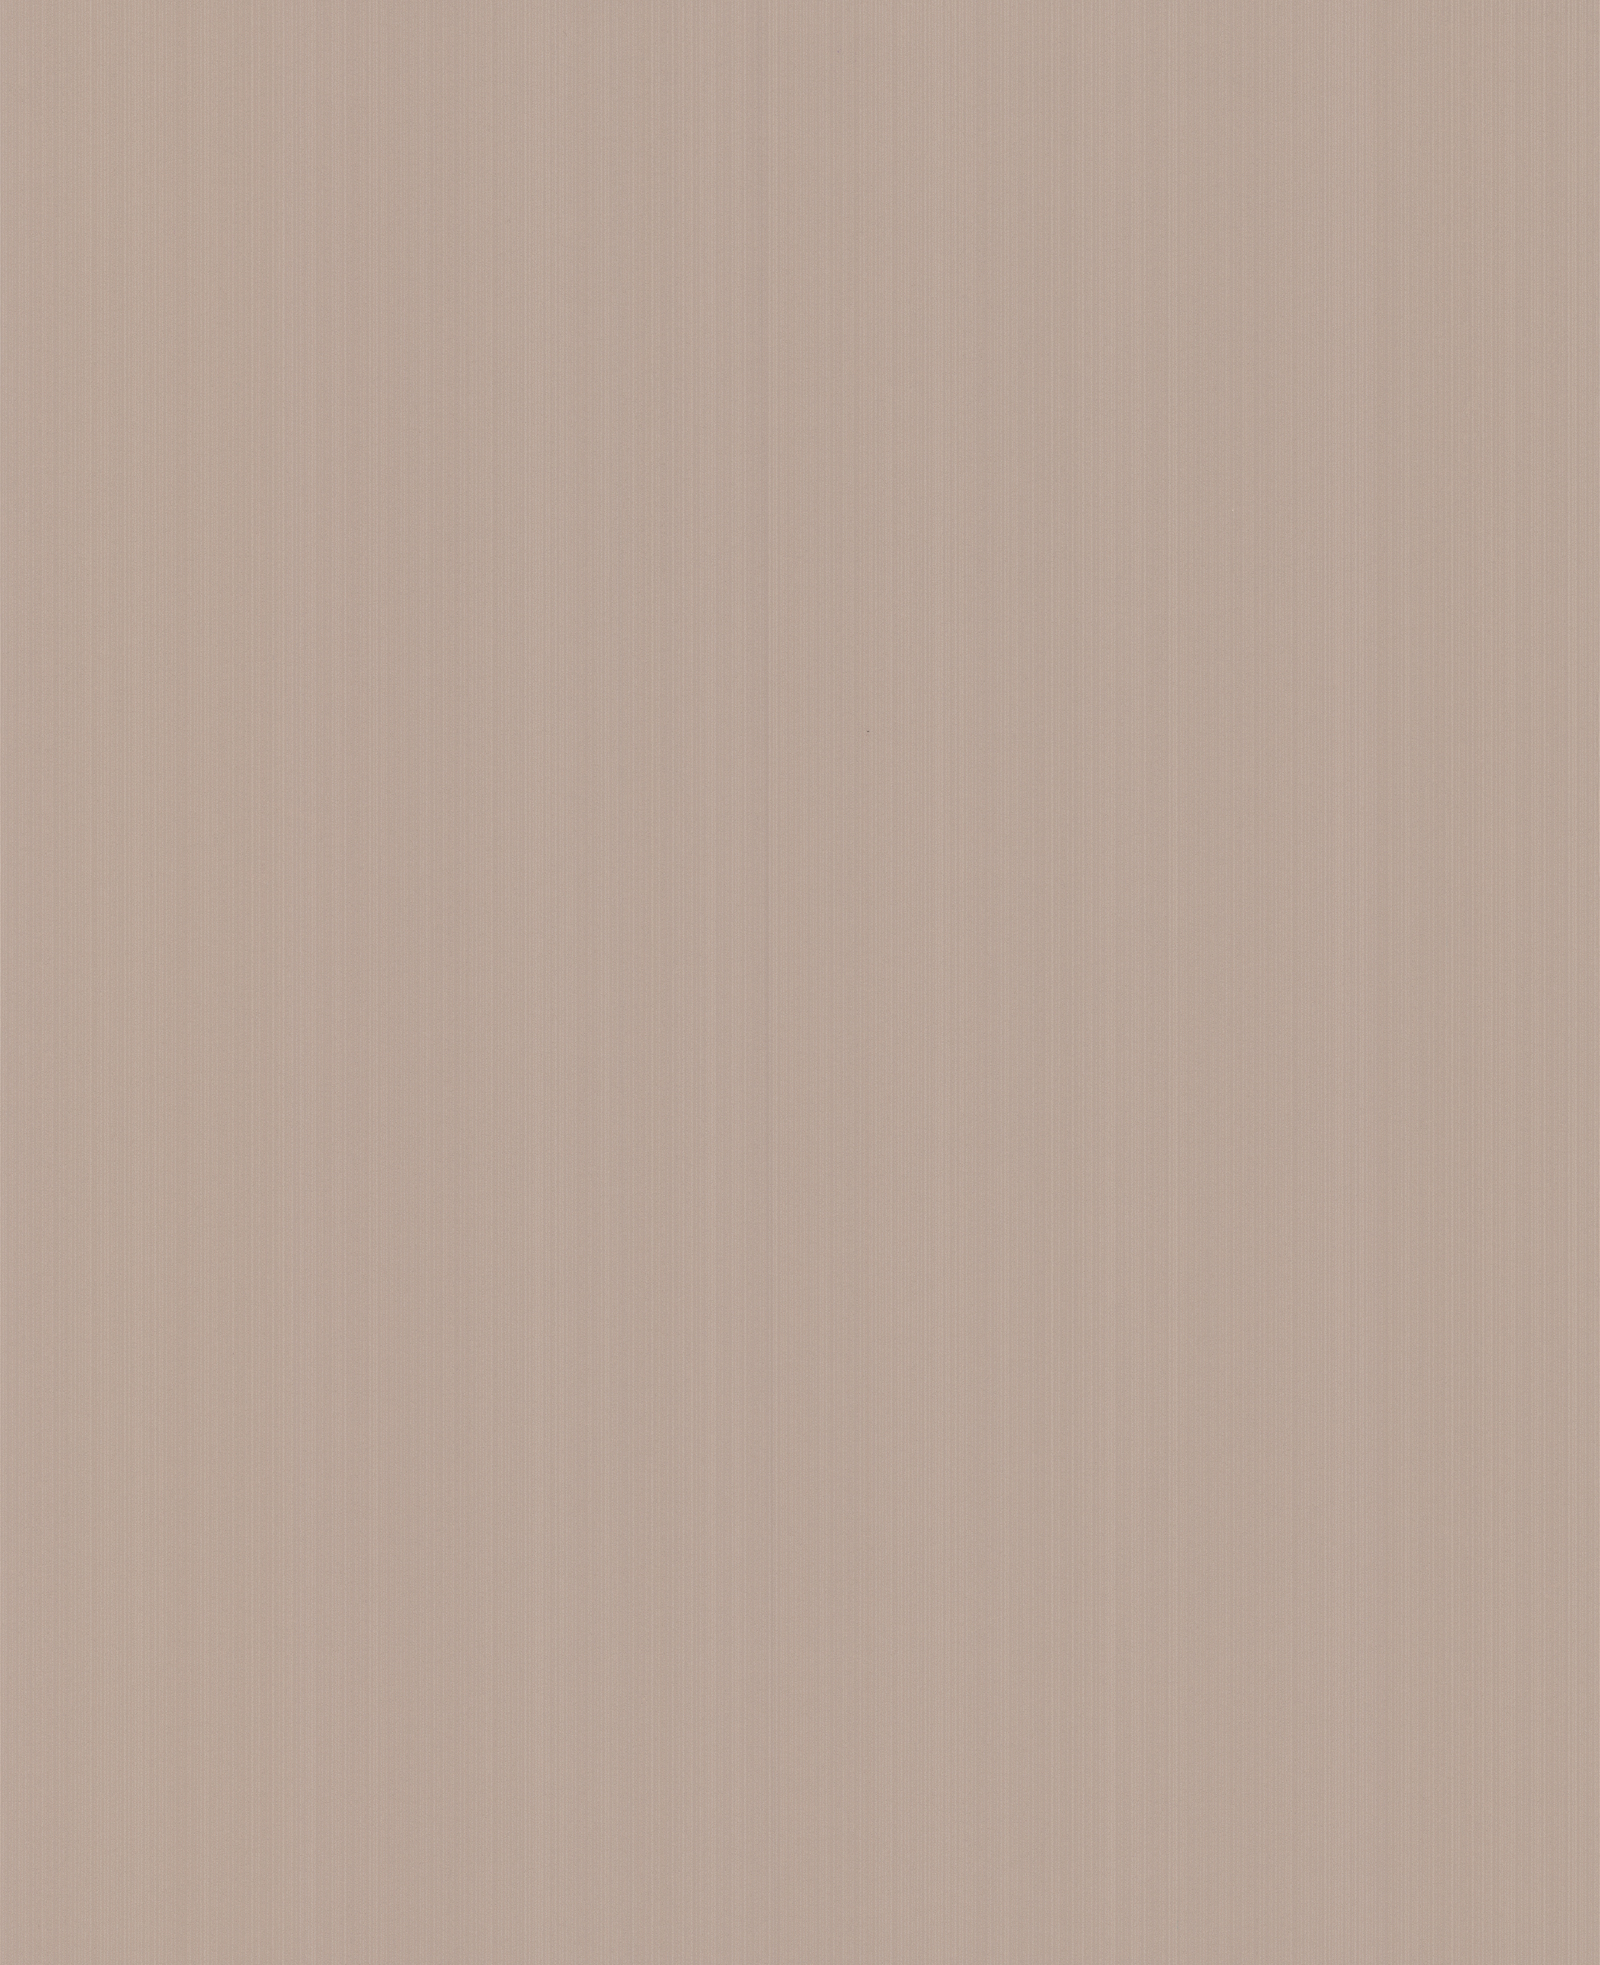 Windsor Tan Solid Color Background Wallpaper 5120x2880